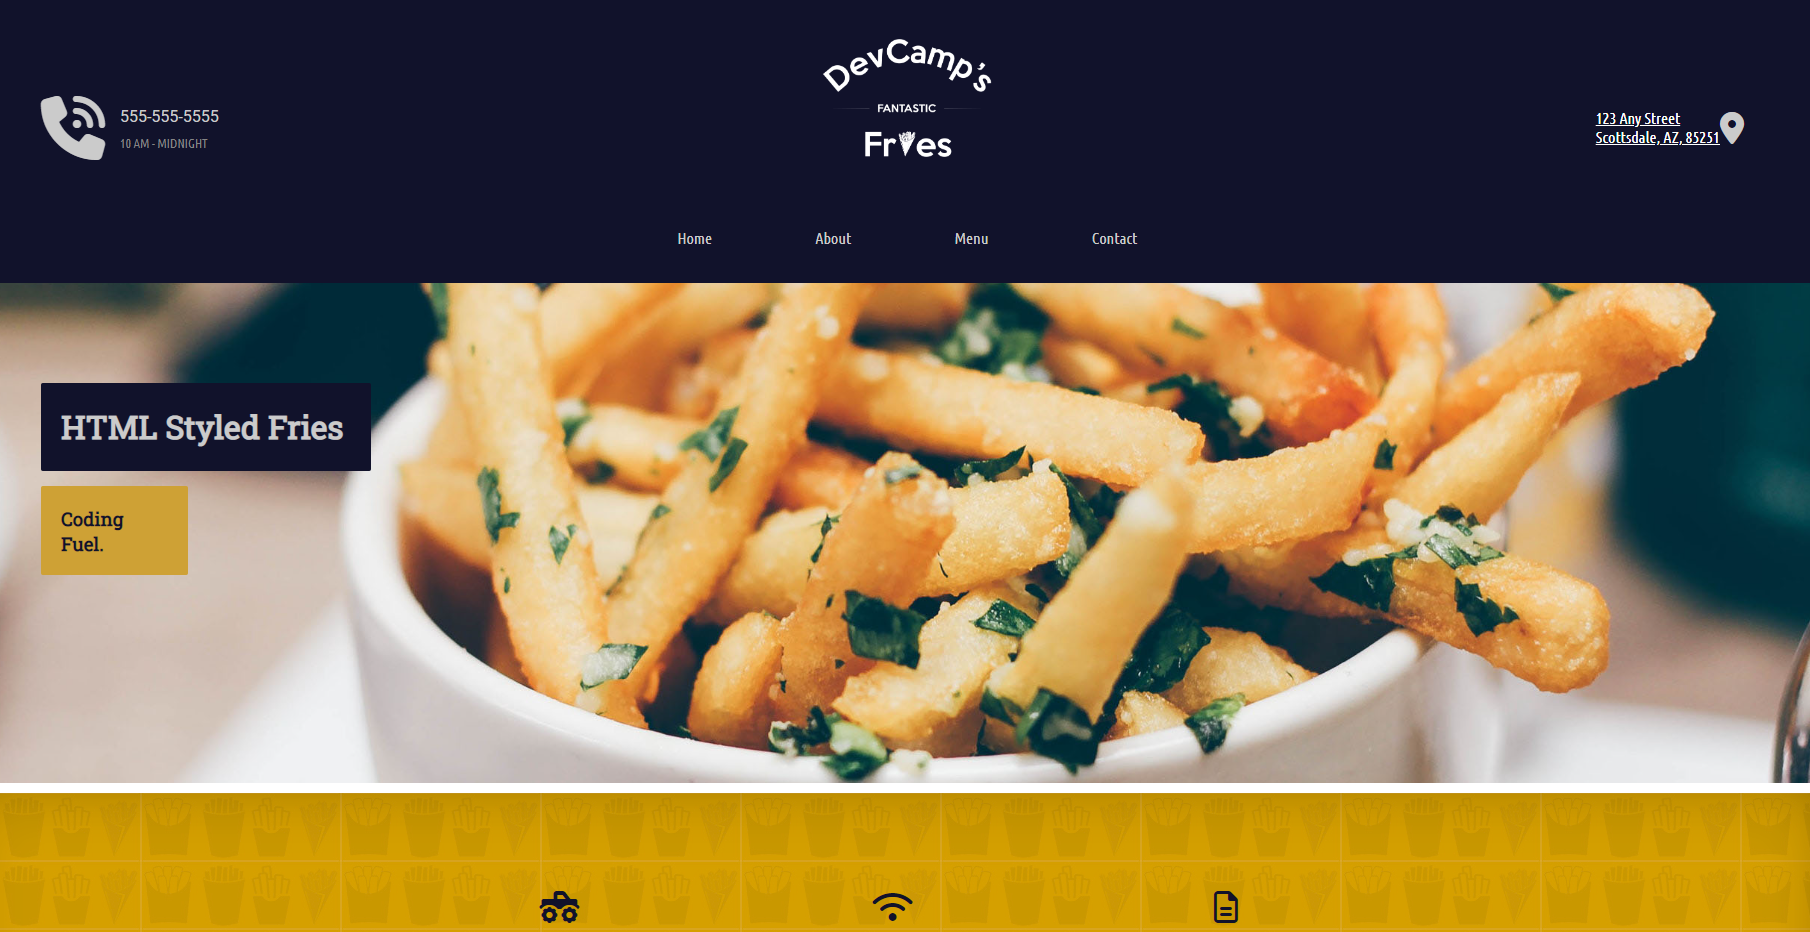 Homescreen of Devcamp Fries Website